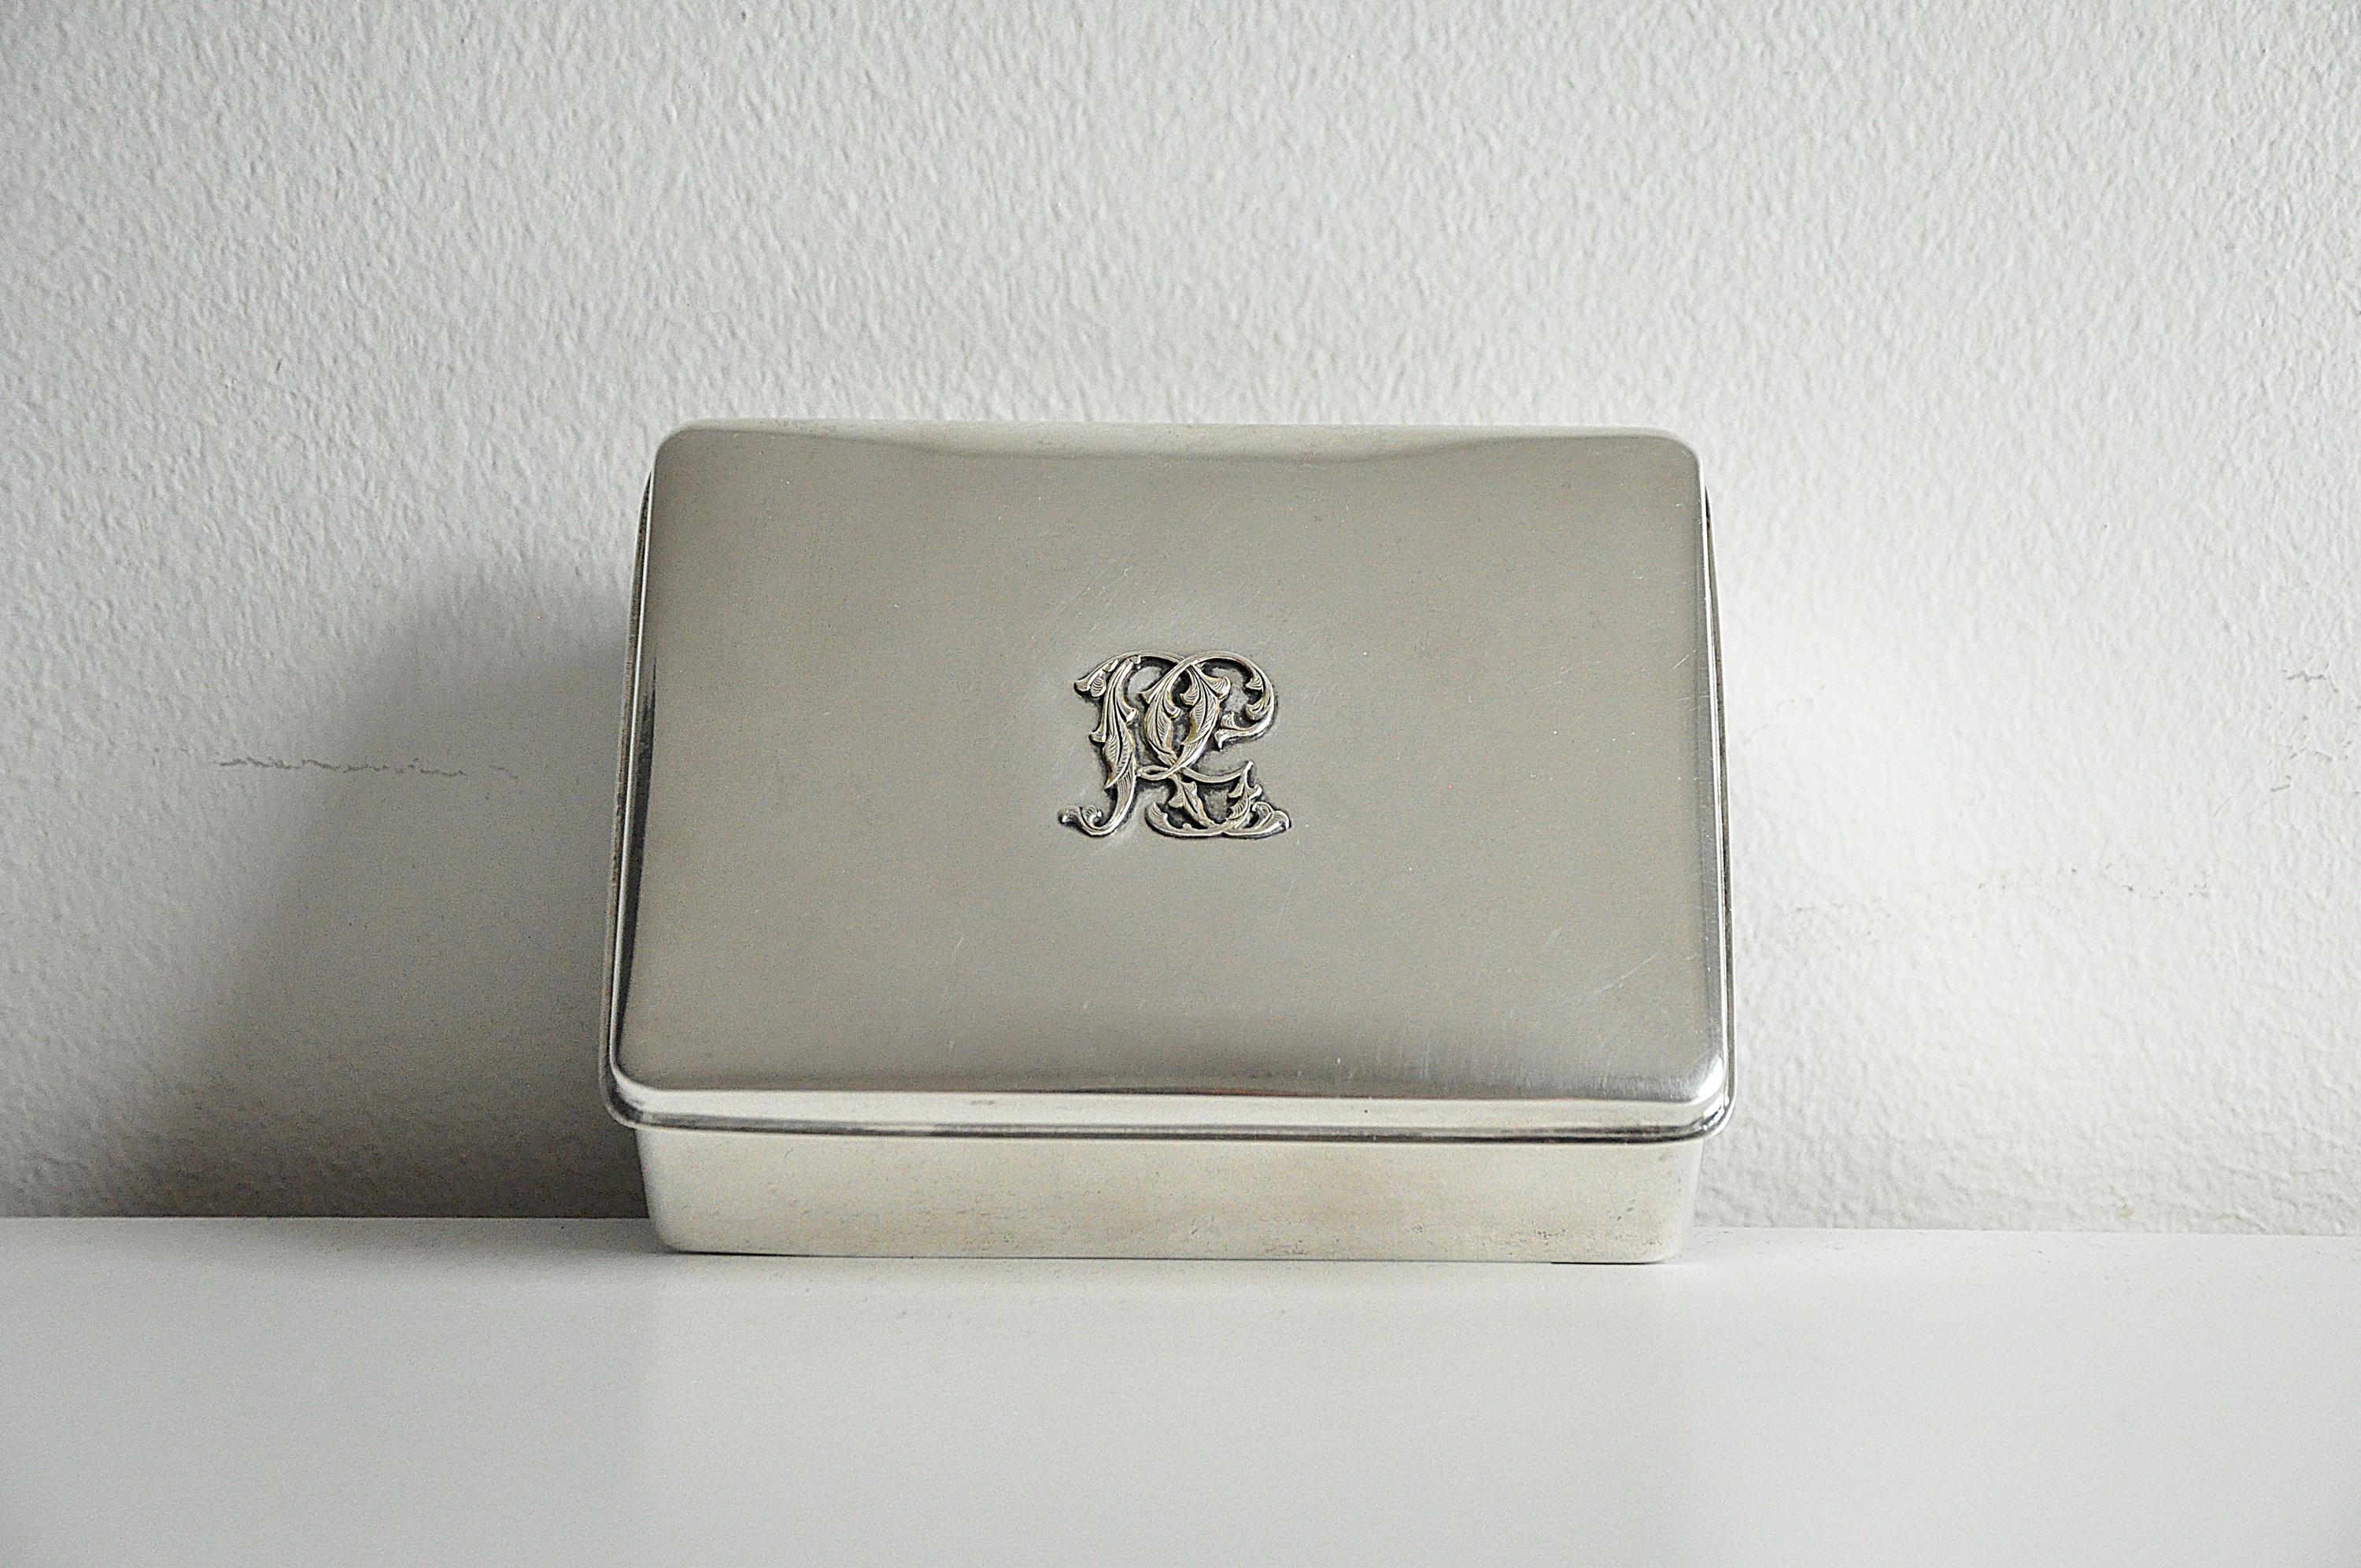 Scandinavian Modern Silver Box from C. G. Hallberg, Sweden -1937 In Good Condition For Sale In Örebro, SE